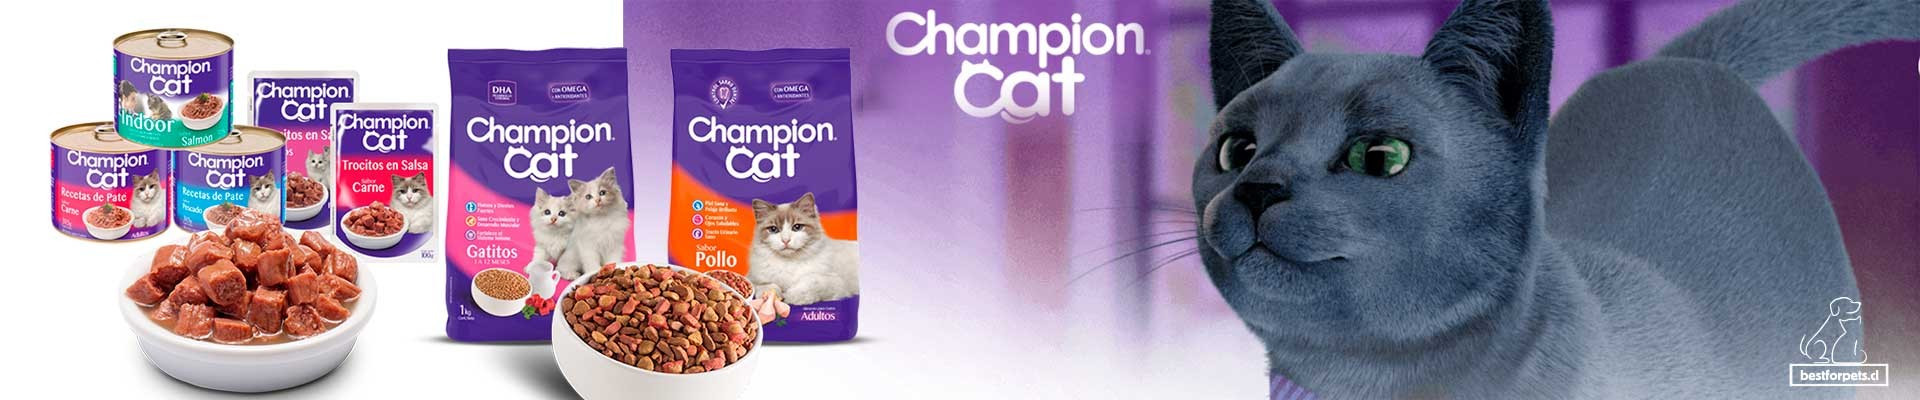 Alimentos Champion para gatos